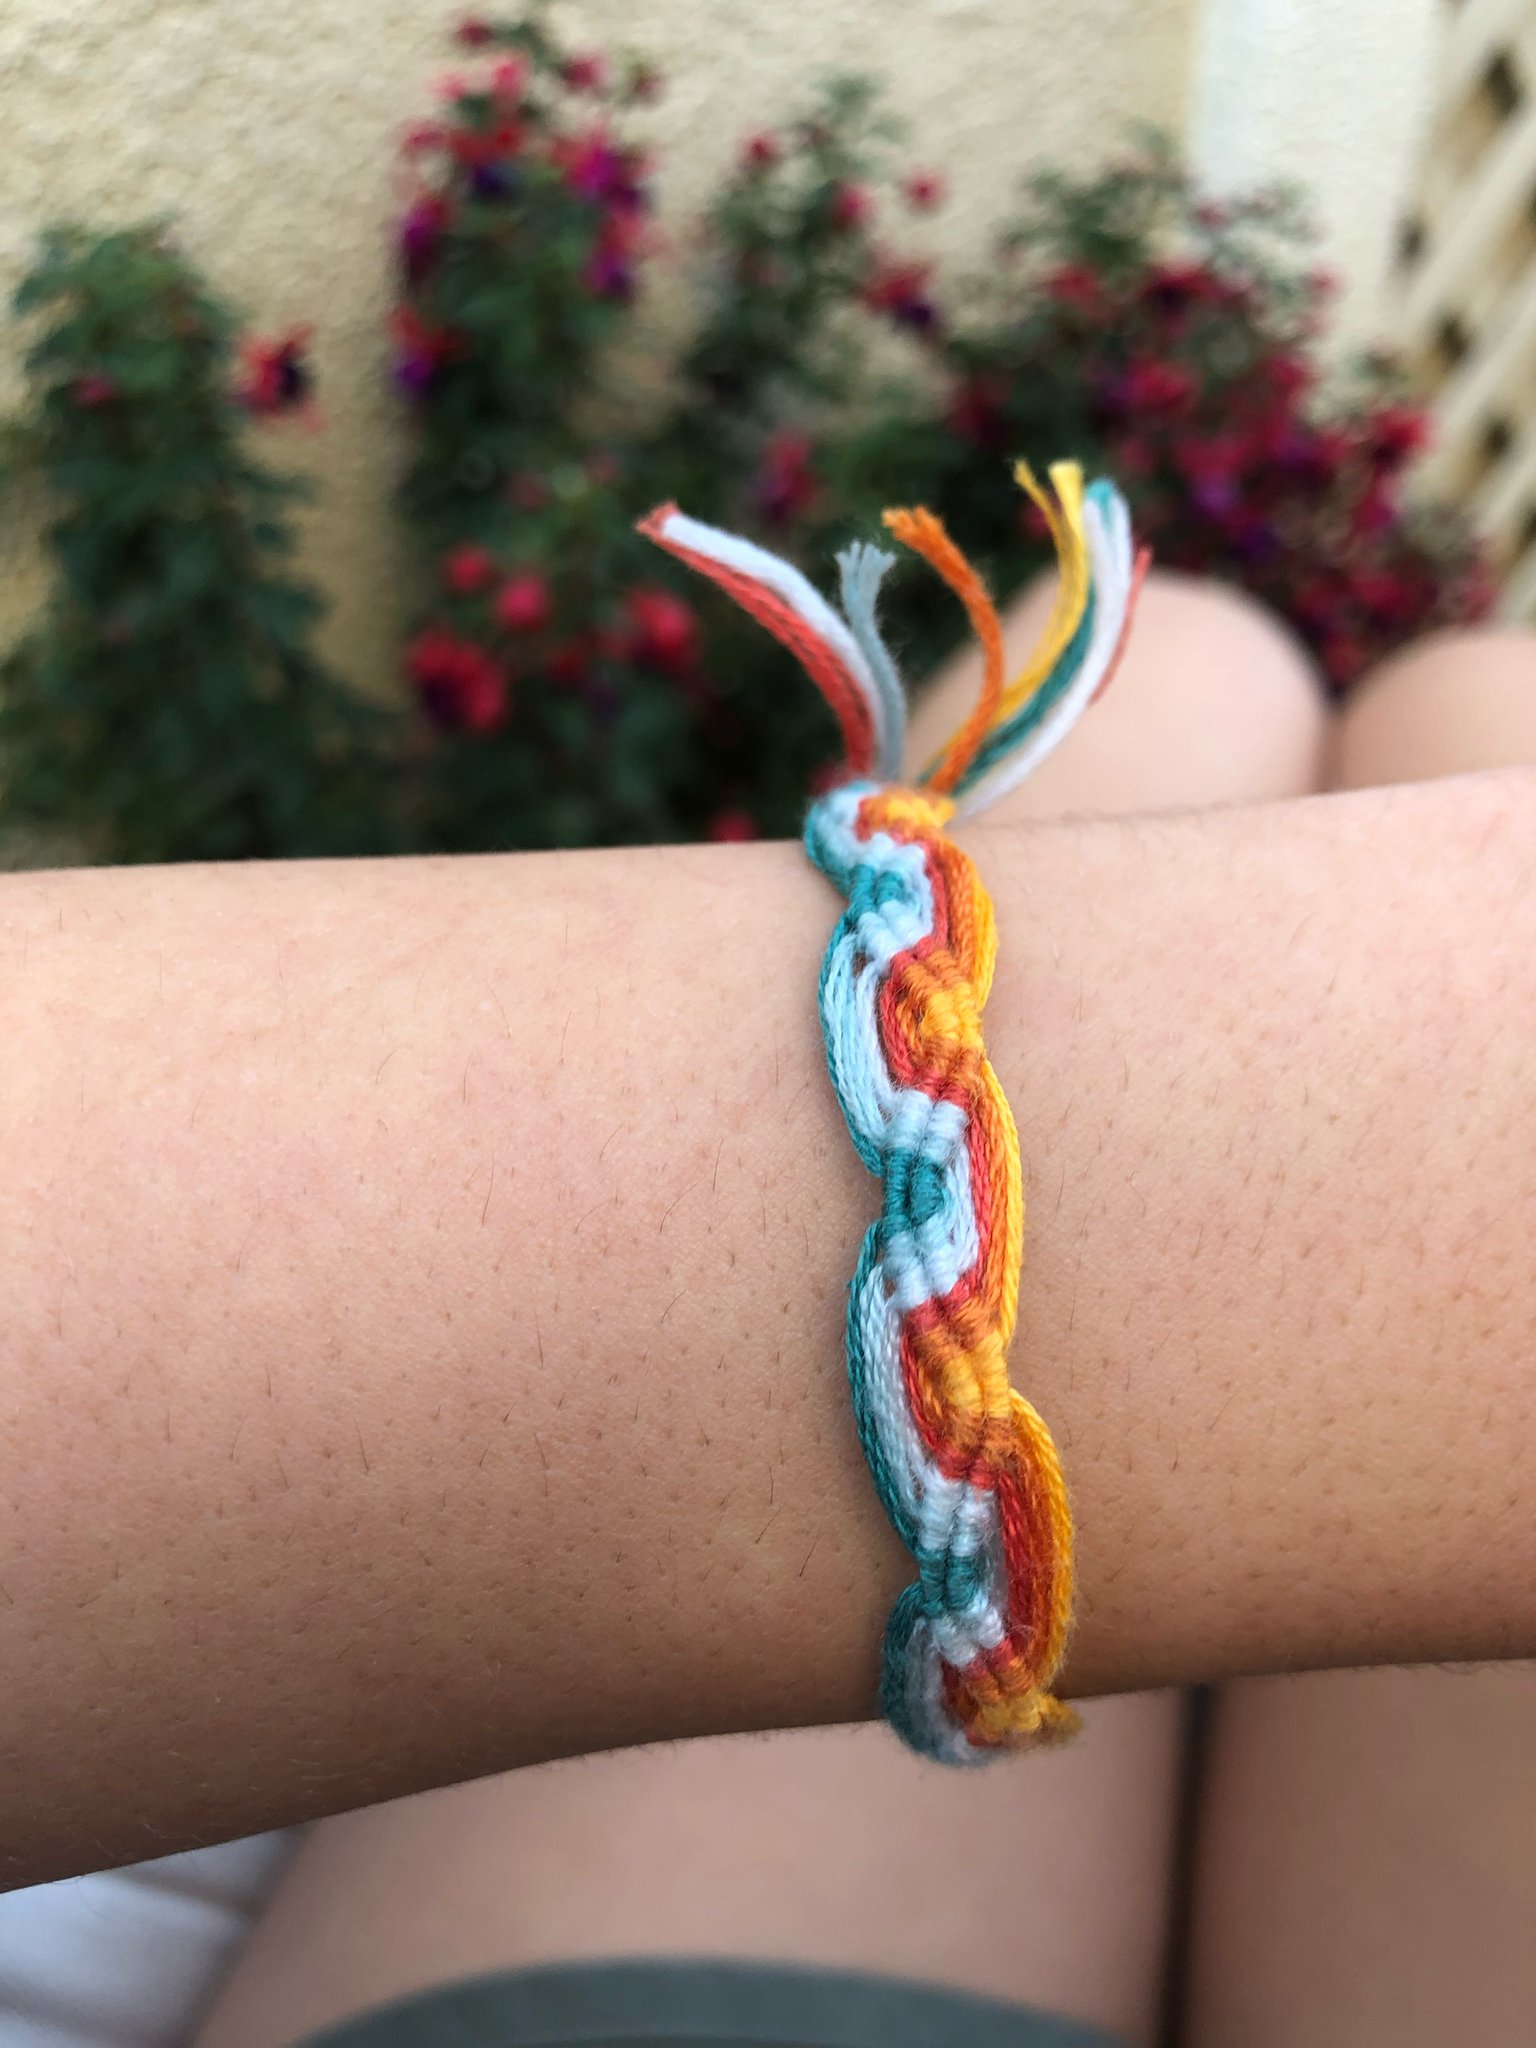 DIY Friendship Bracelet | Easy Spiral Tutorial - YouTube